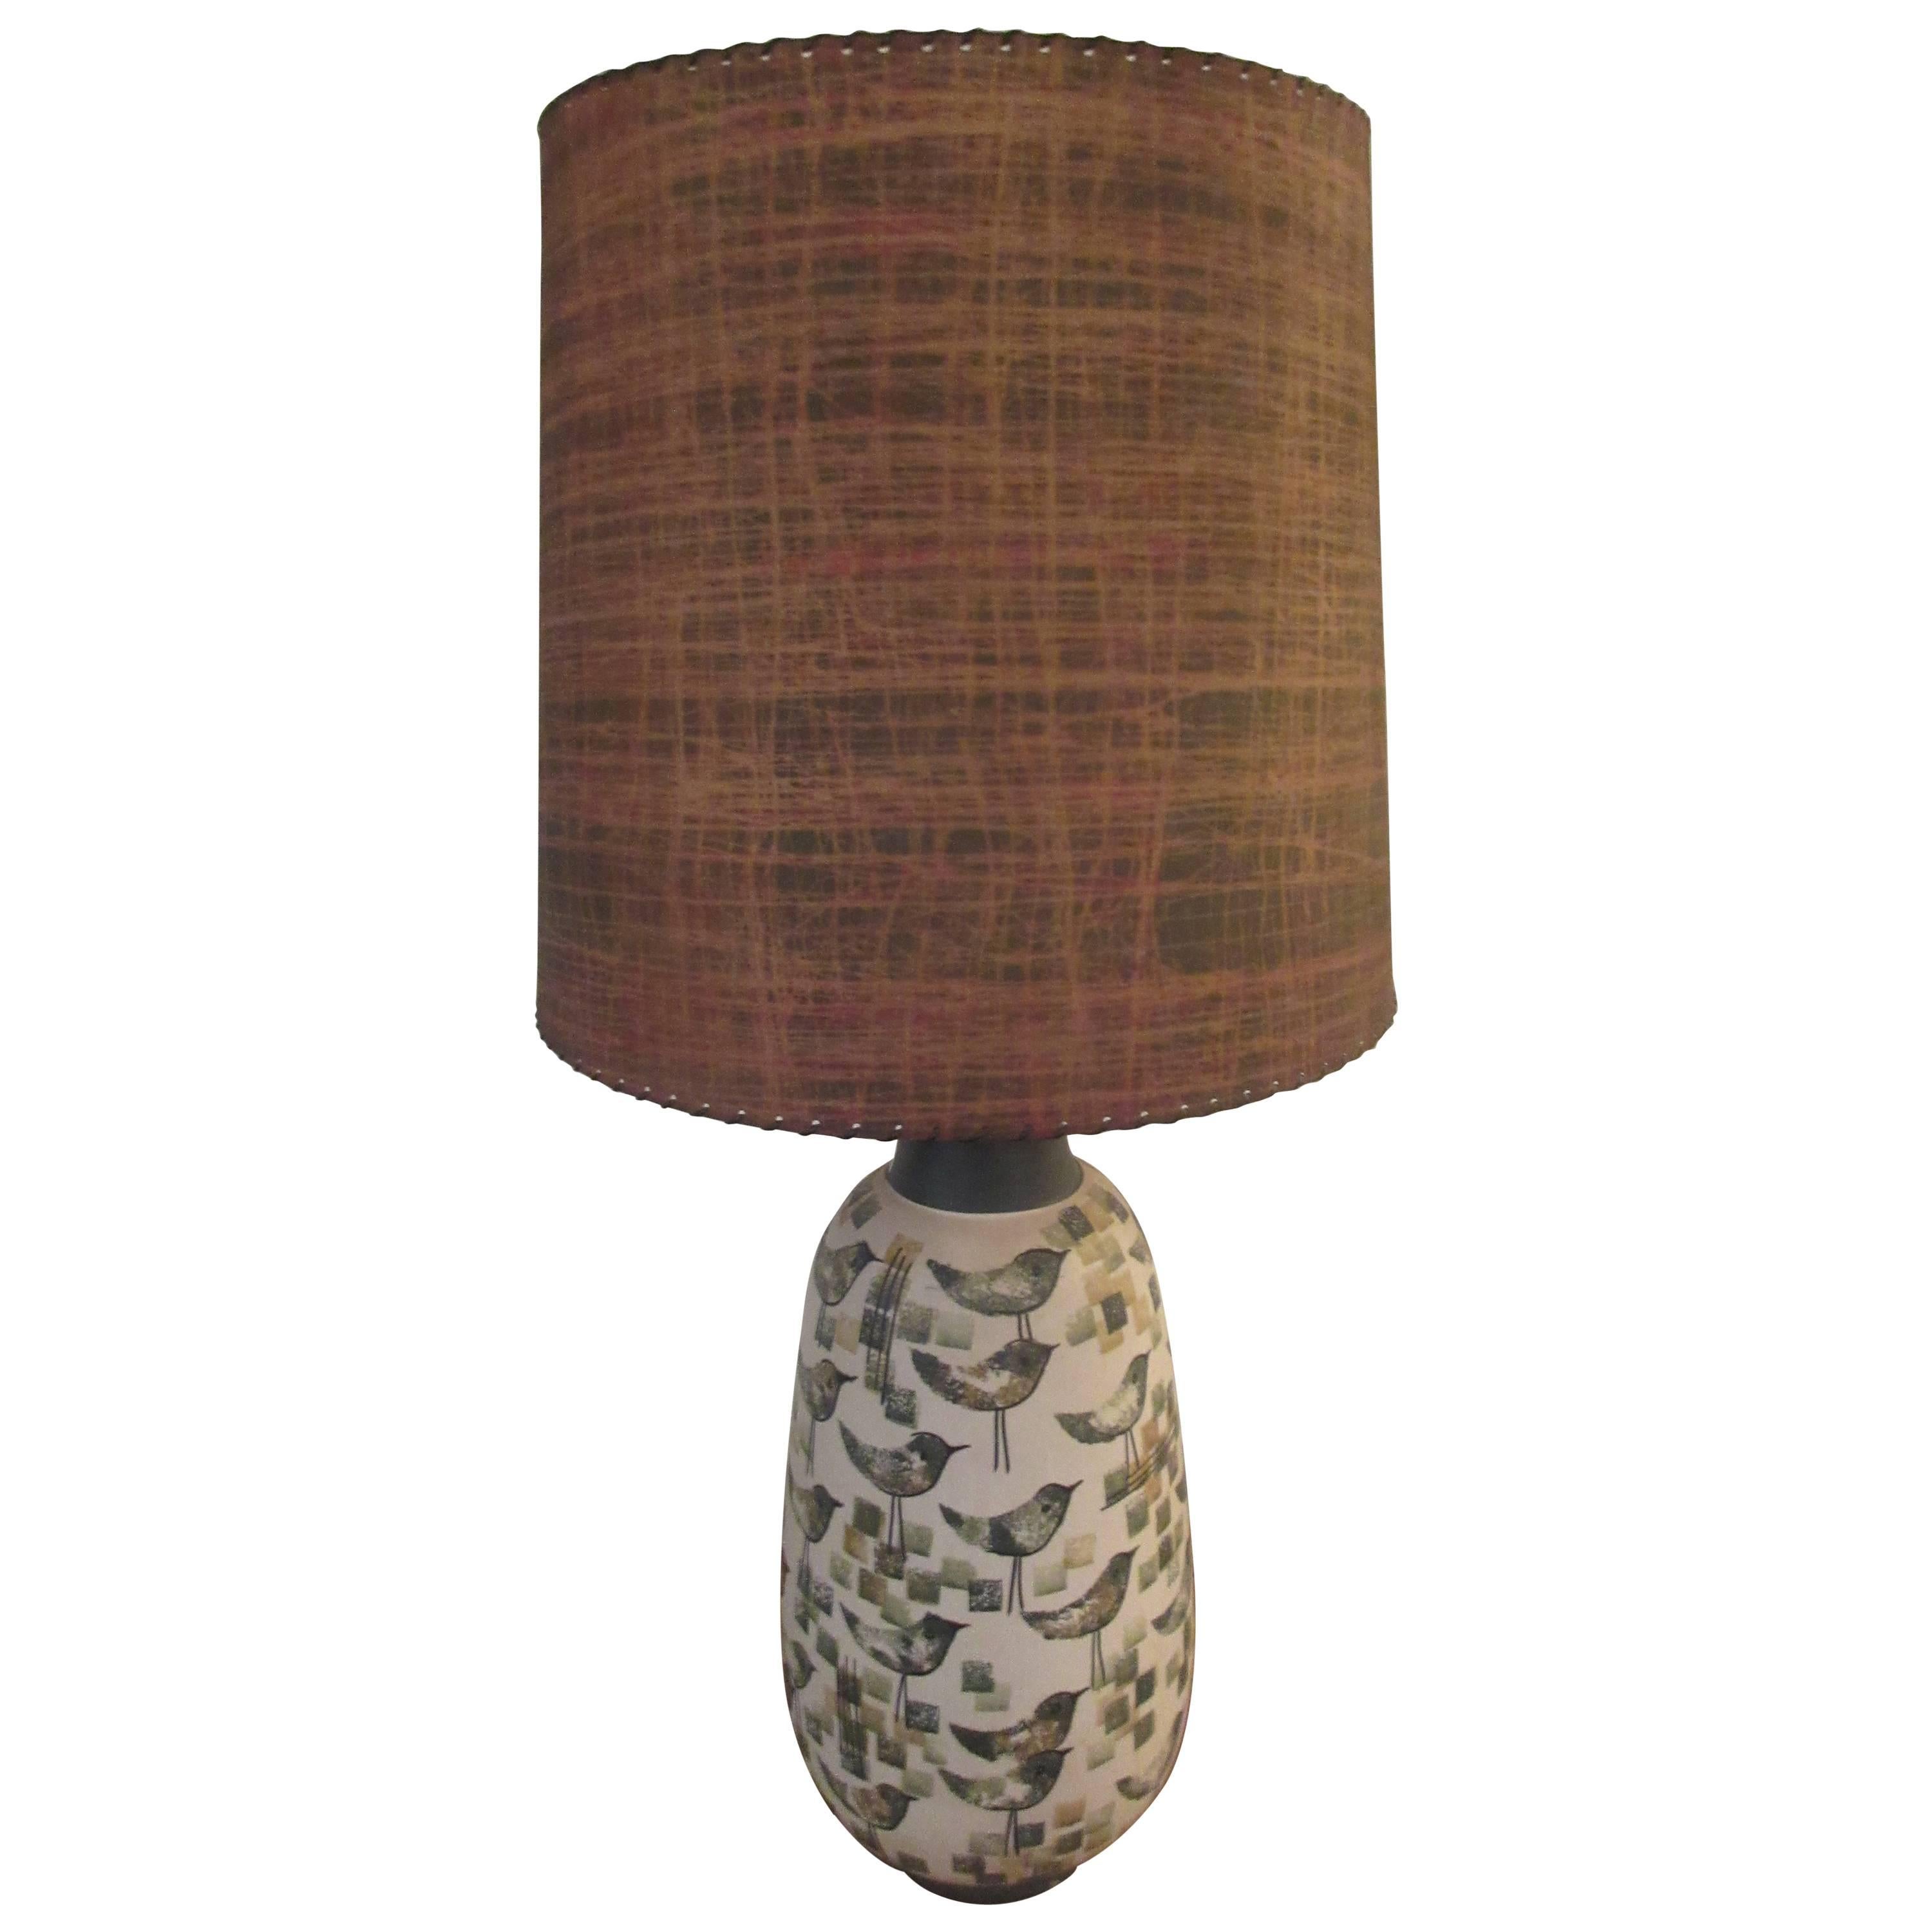 Italian Ceramic Bird Lamp with Fiberglass Shade